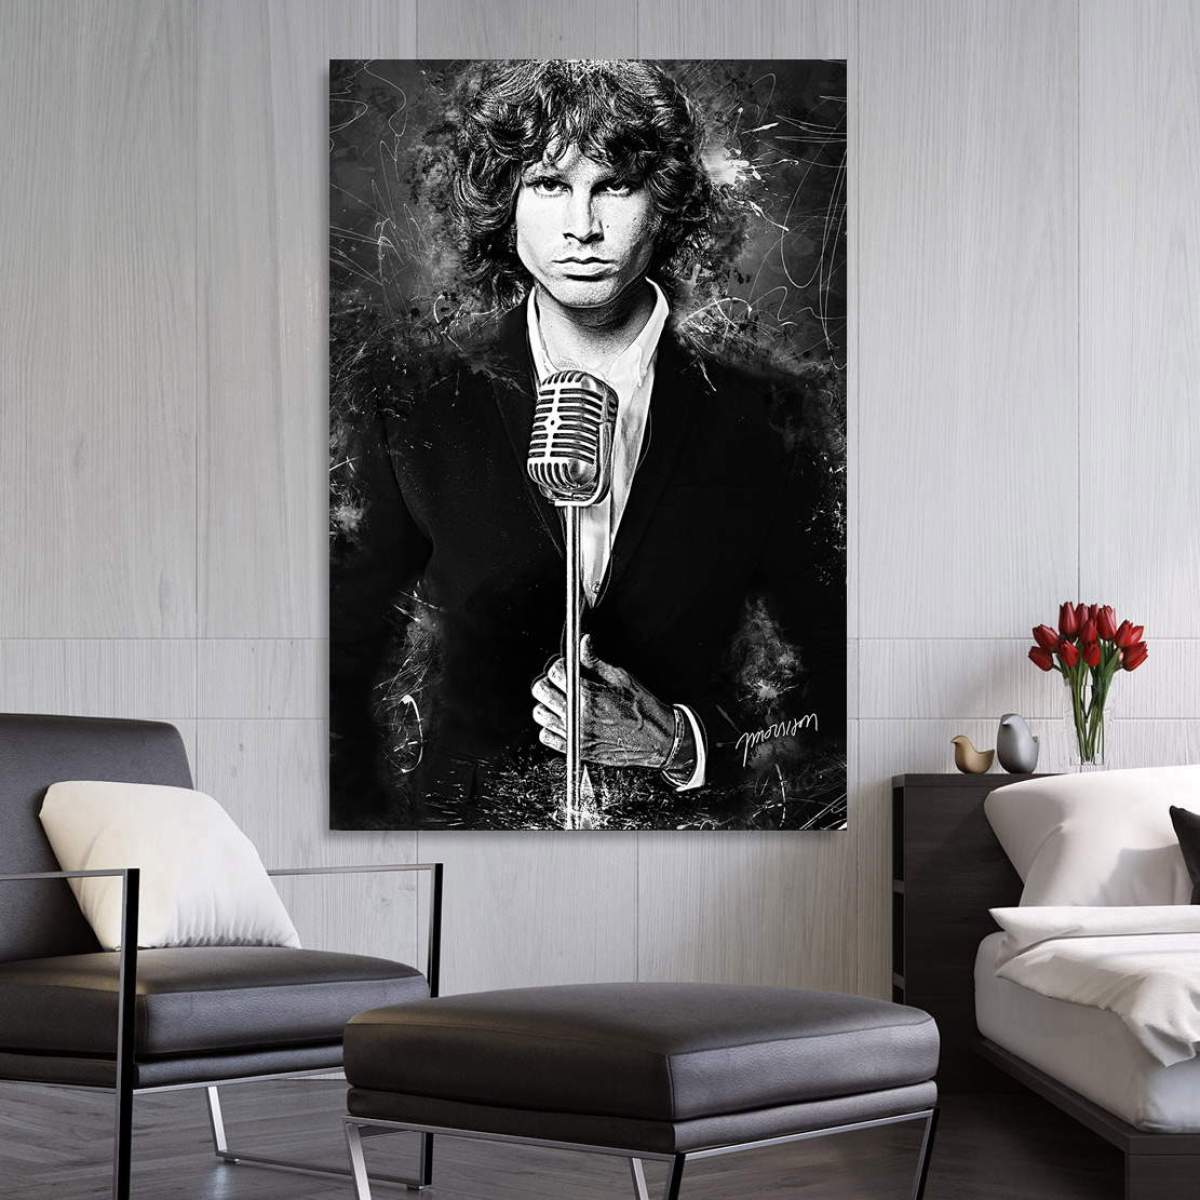 Leinwandbild-Jim-Morrison